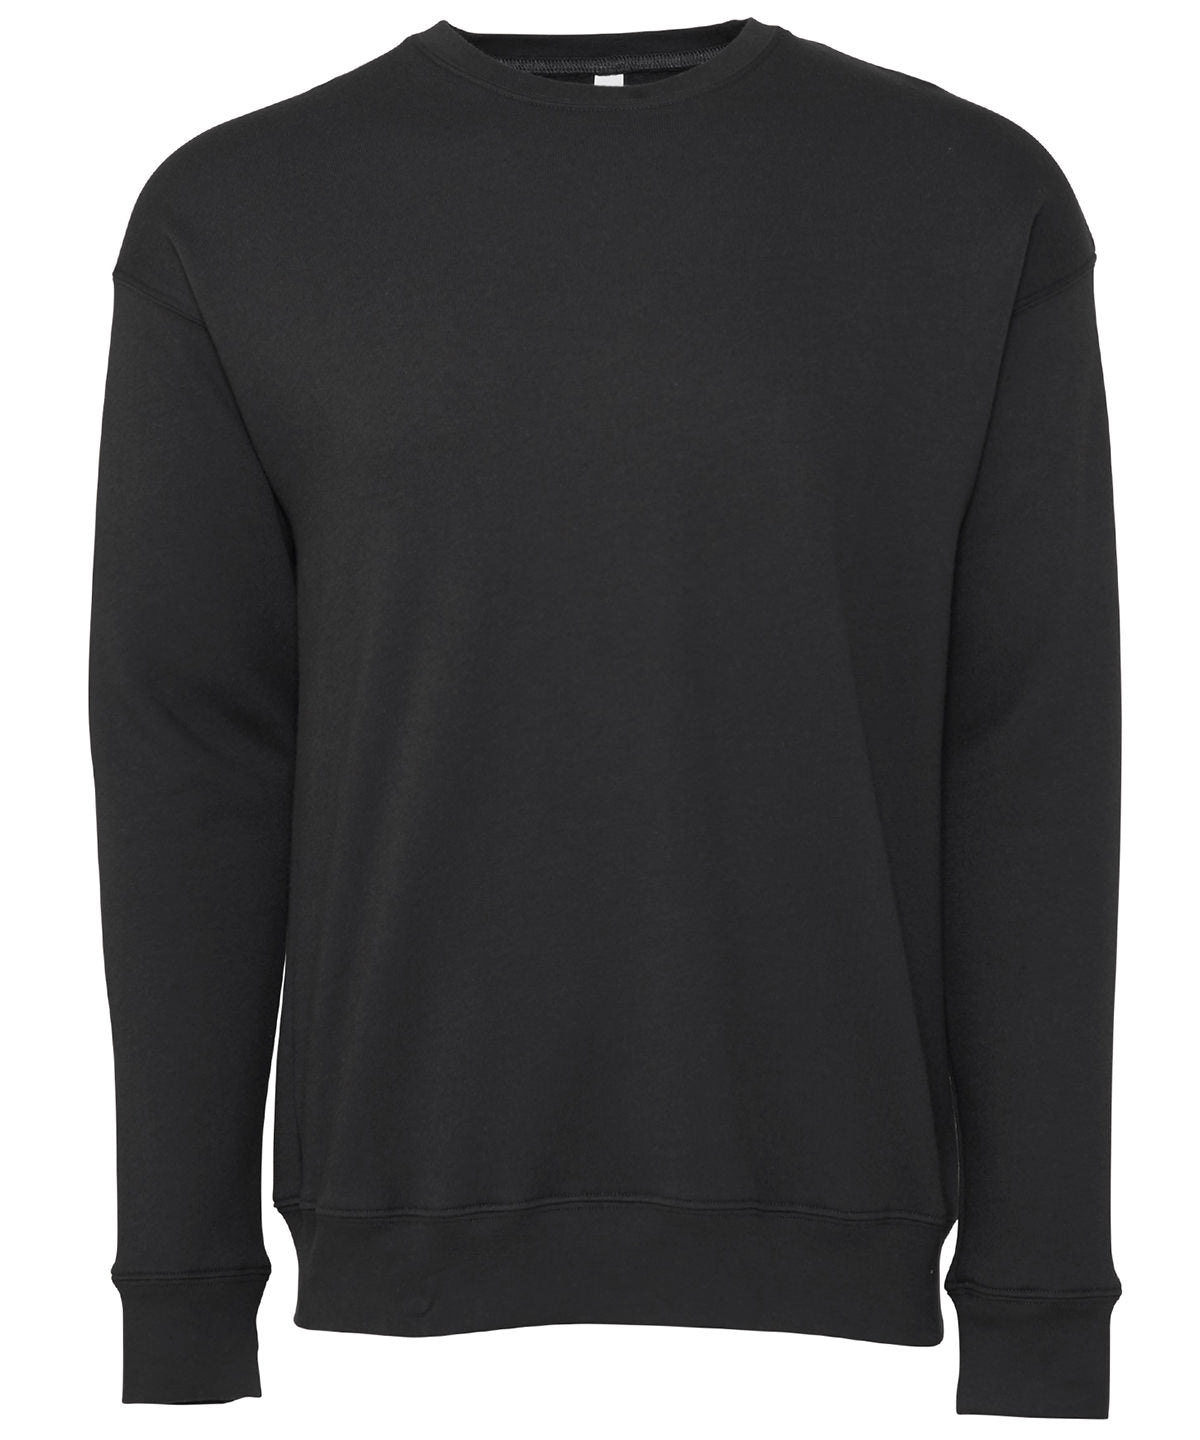 Personalised Sweatshirts - Light Orange Bella Canvas Unisex drop shoulder fleece